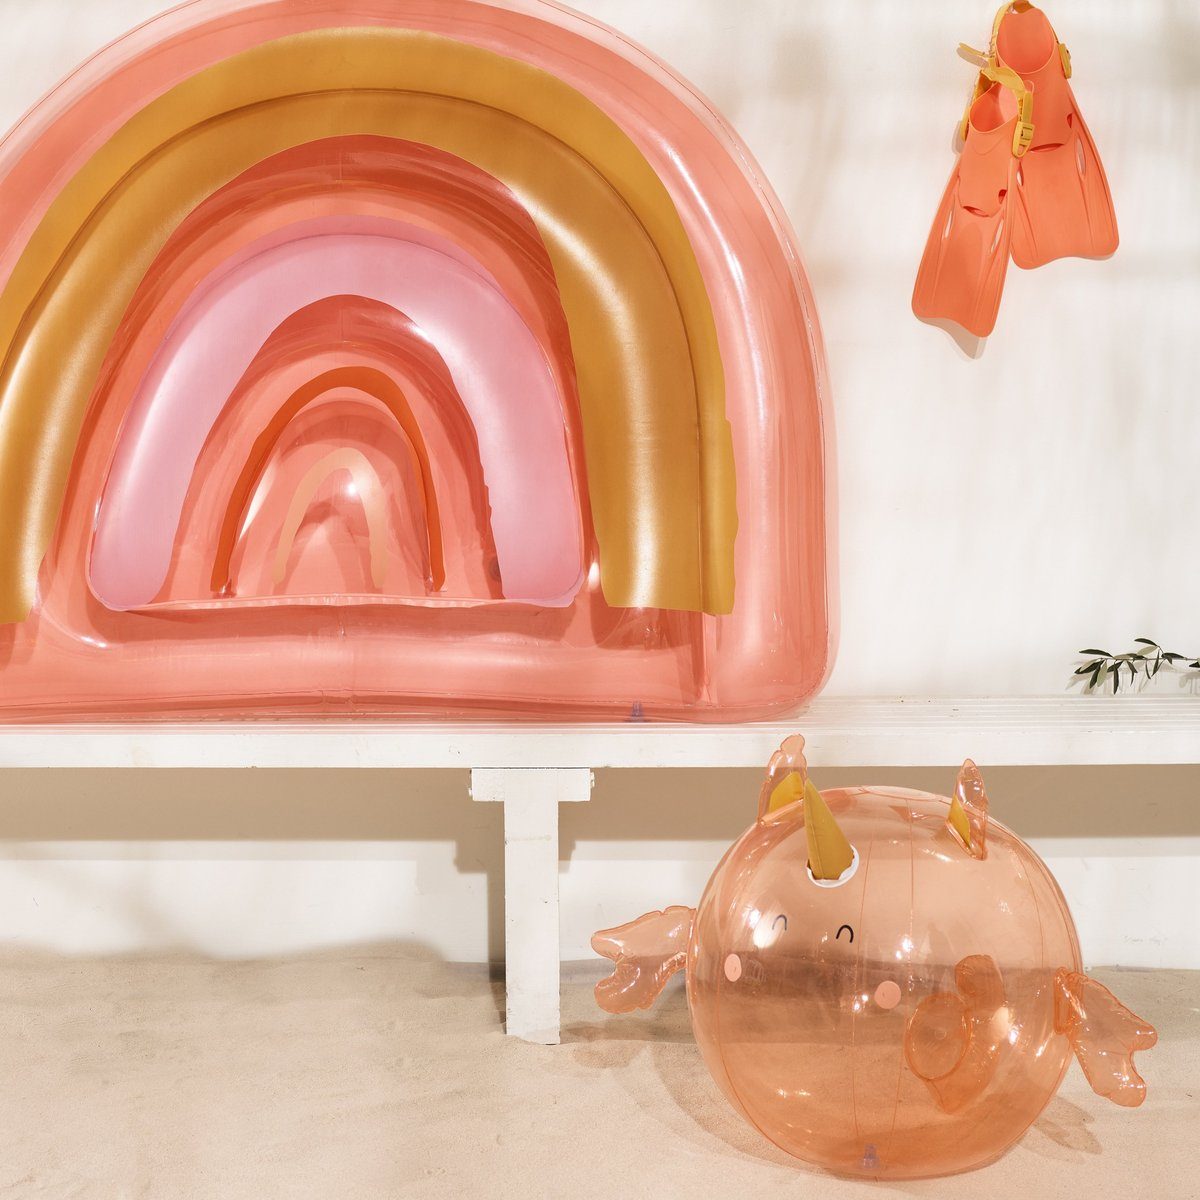 Inflatable Buddy Ball Seahorse Unicorn- Peachy Pink